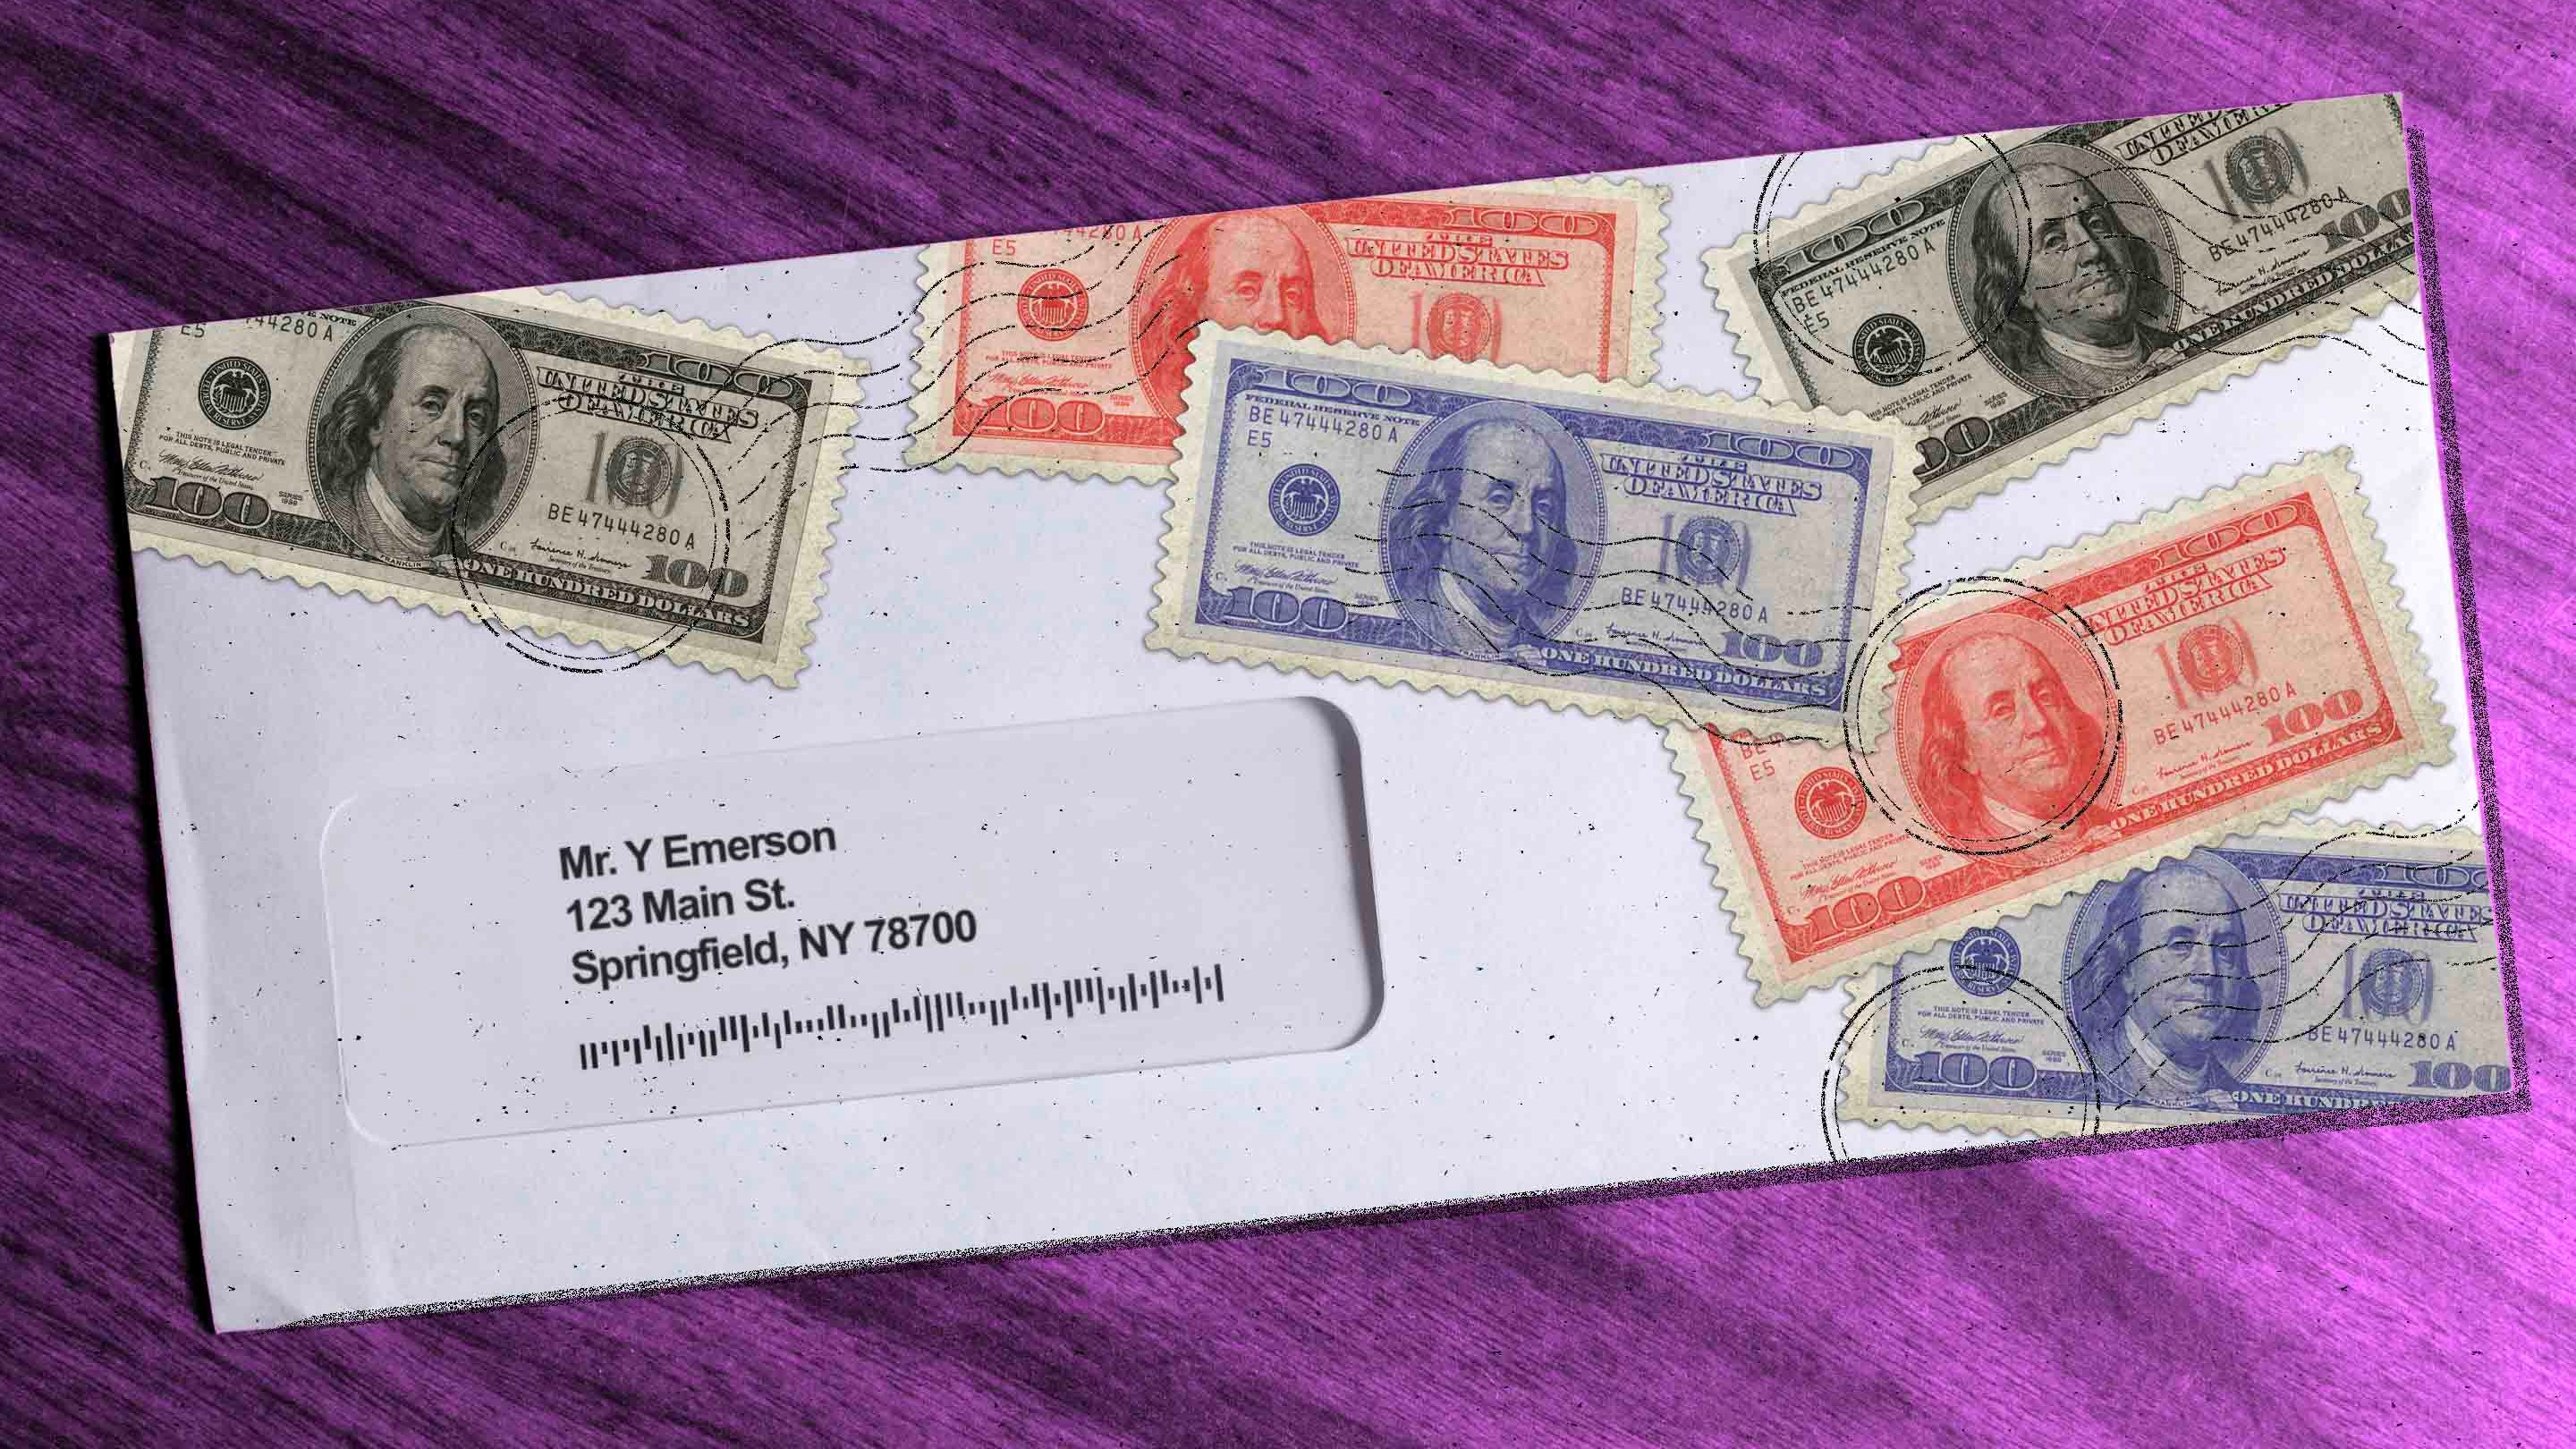 US Stamps on International Postcards - Mail, stamps & postal info